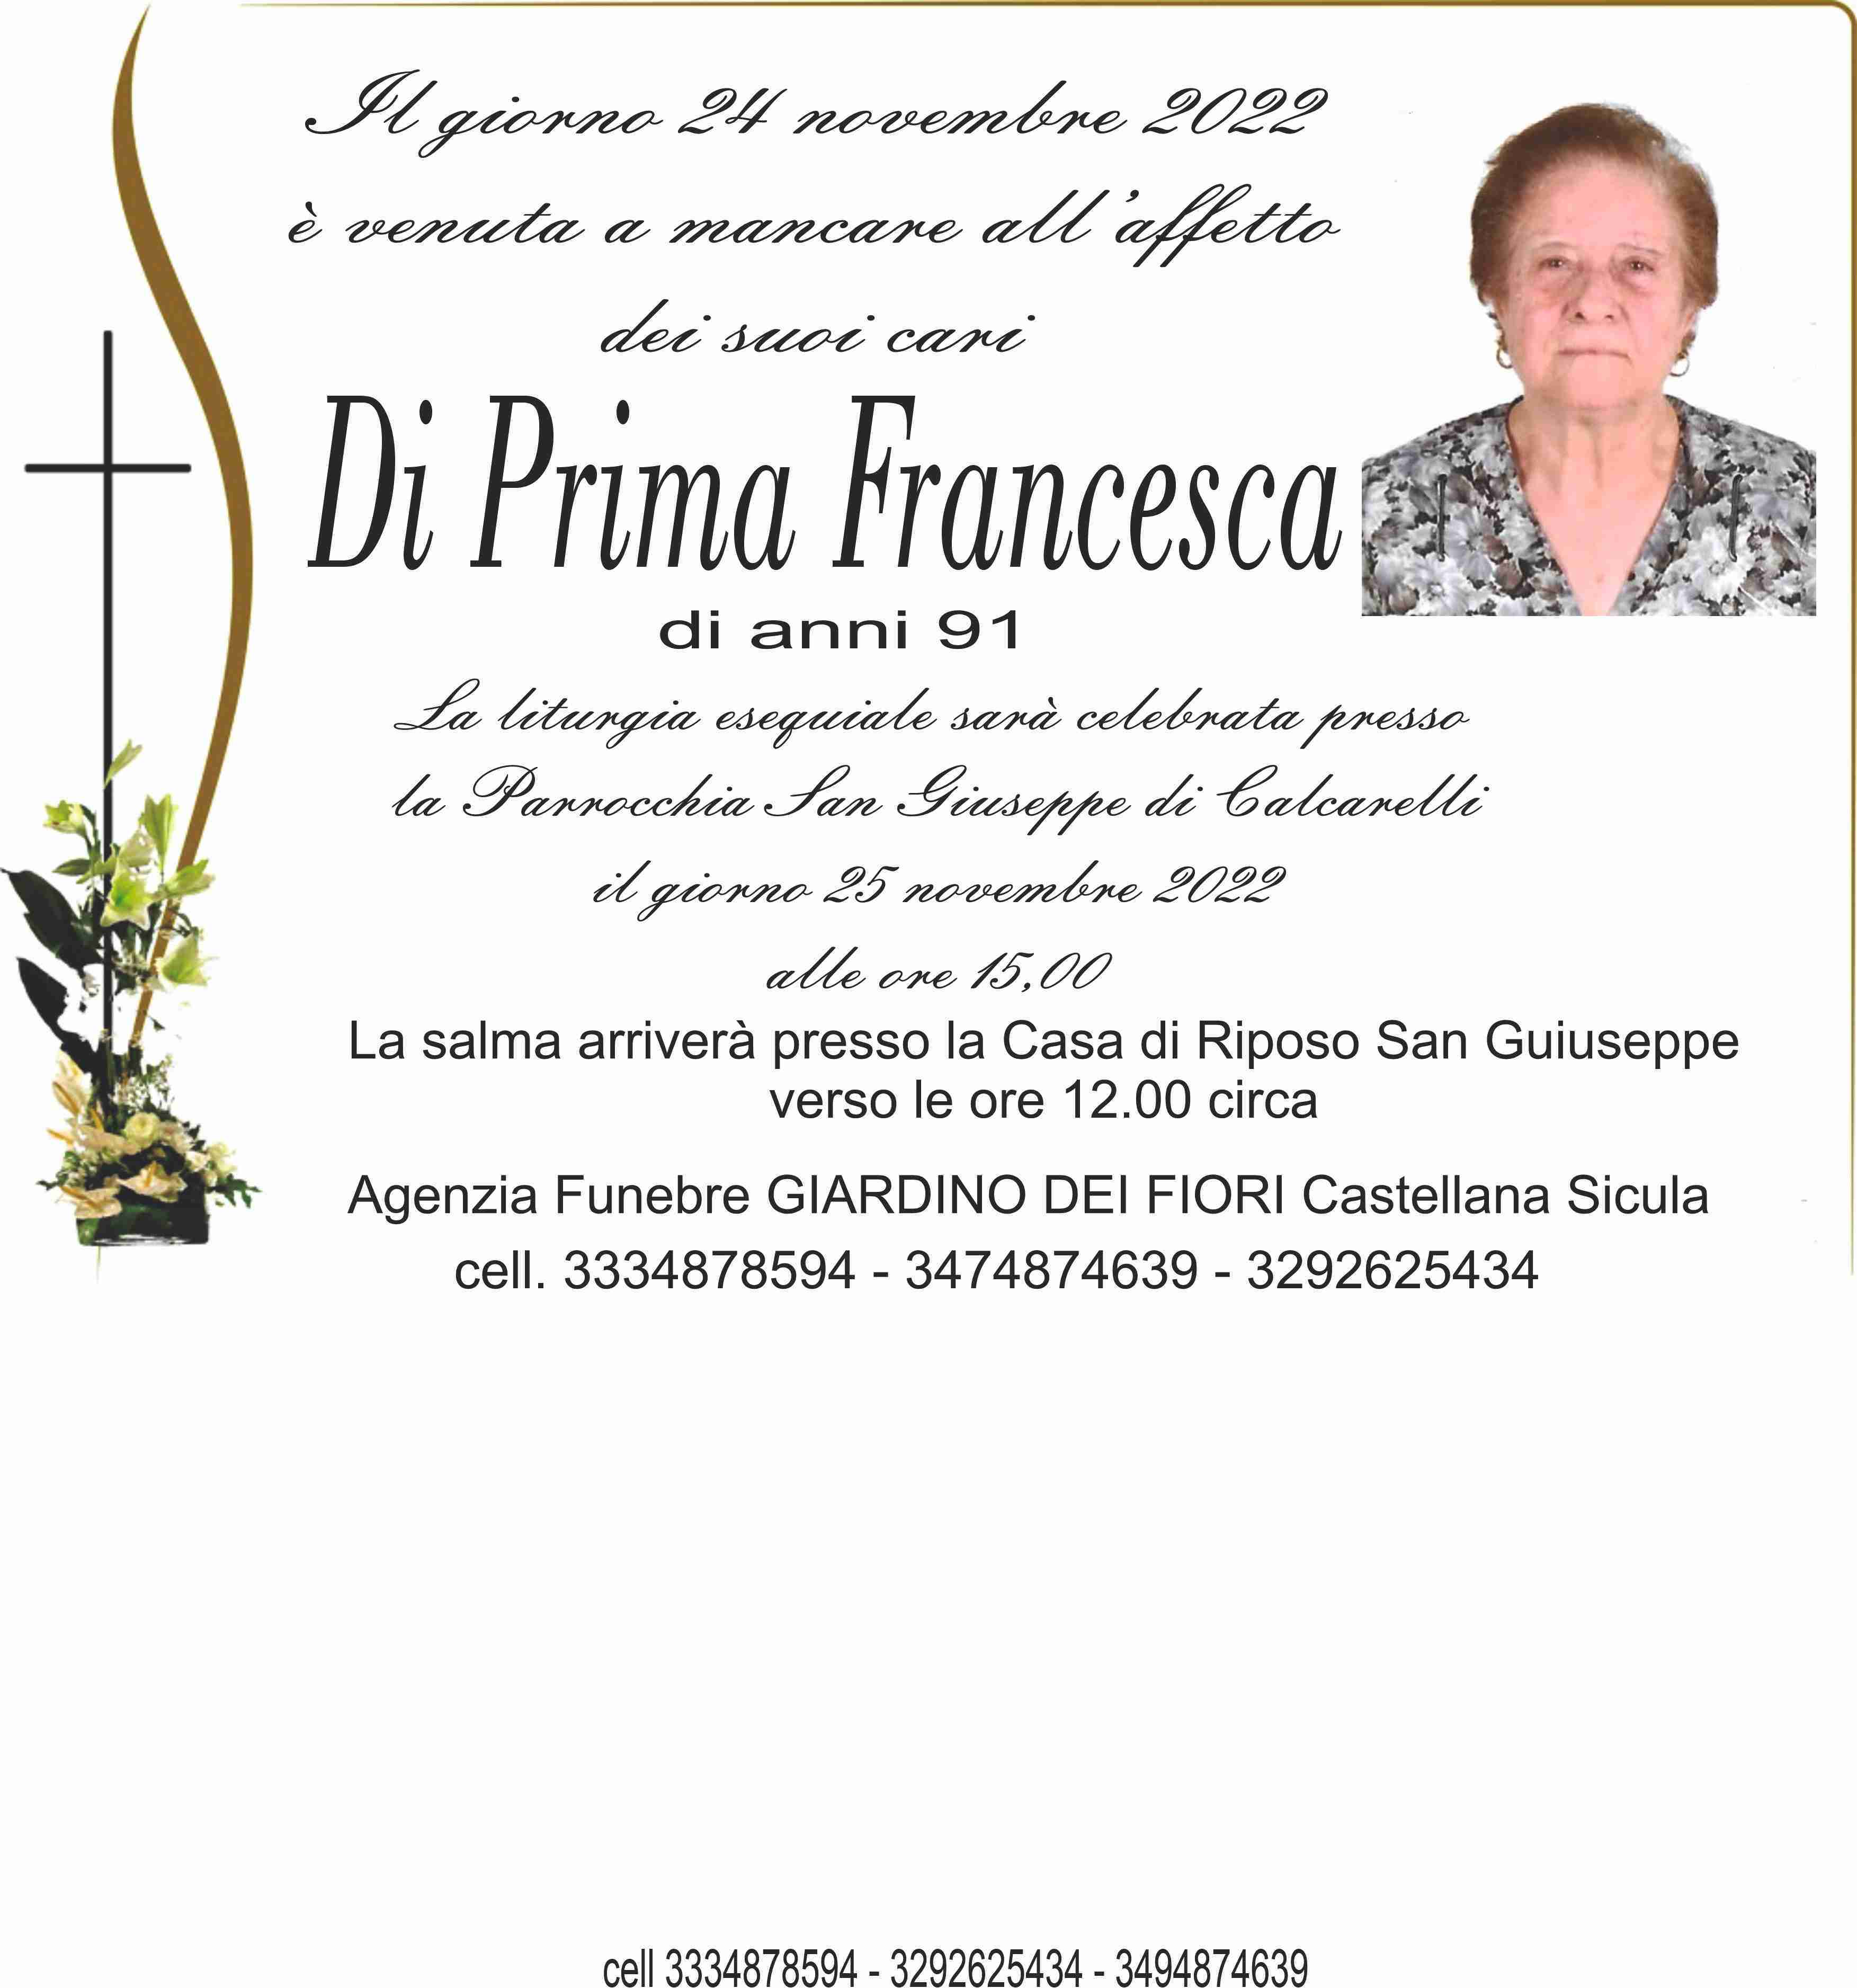 Francesca Di Prima